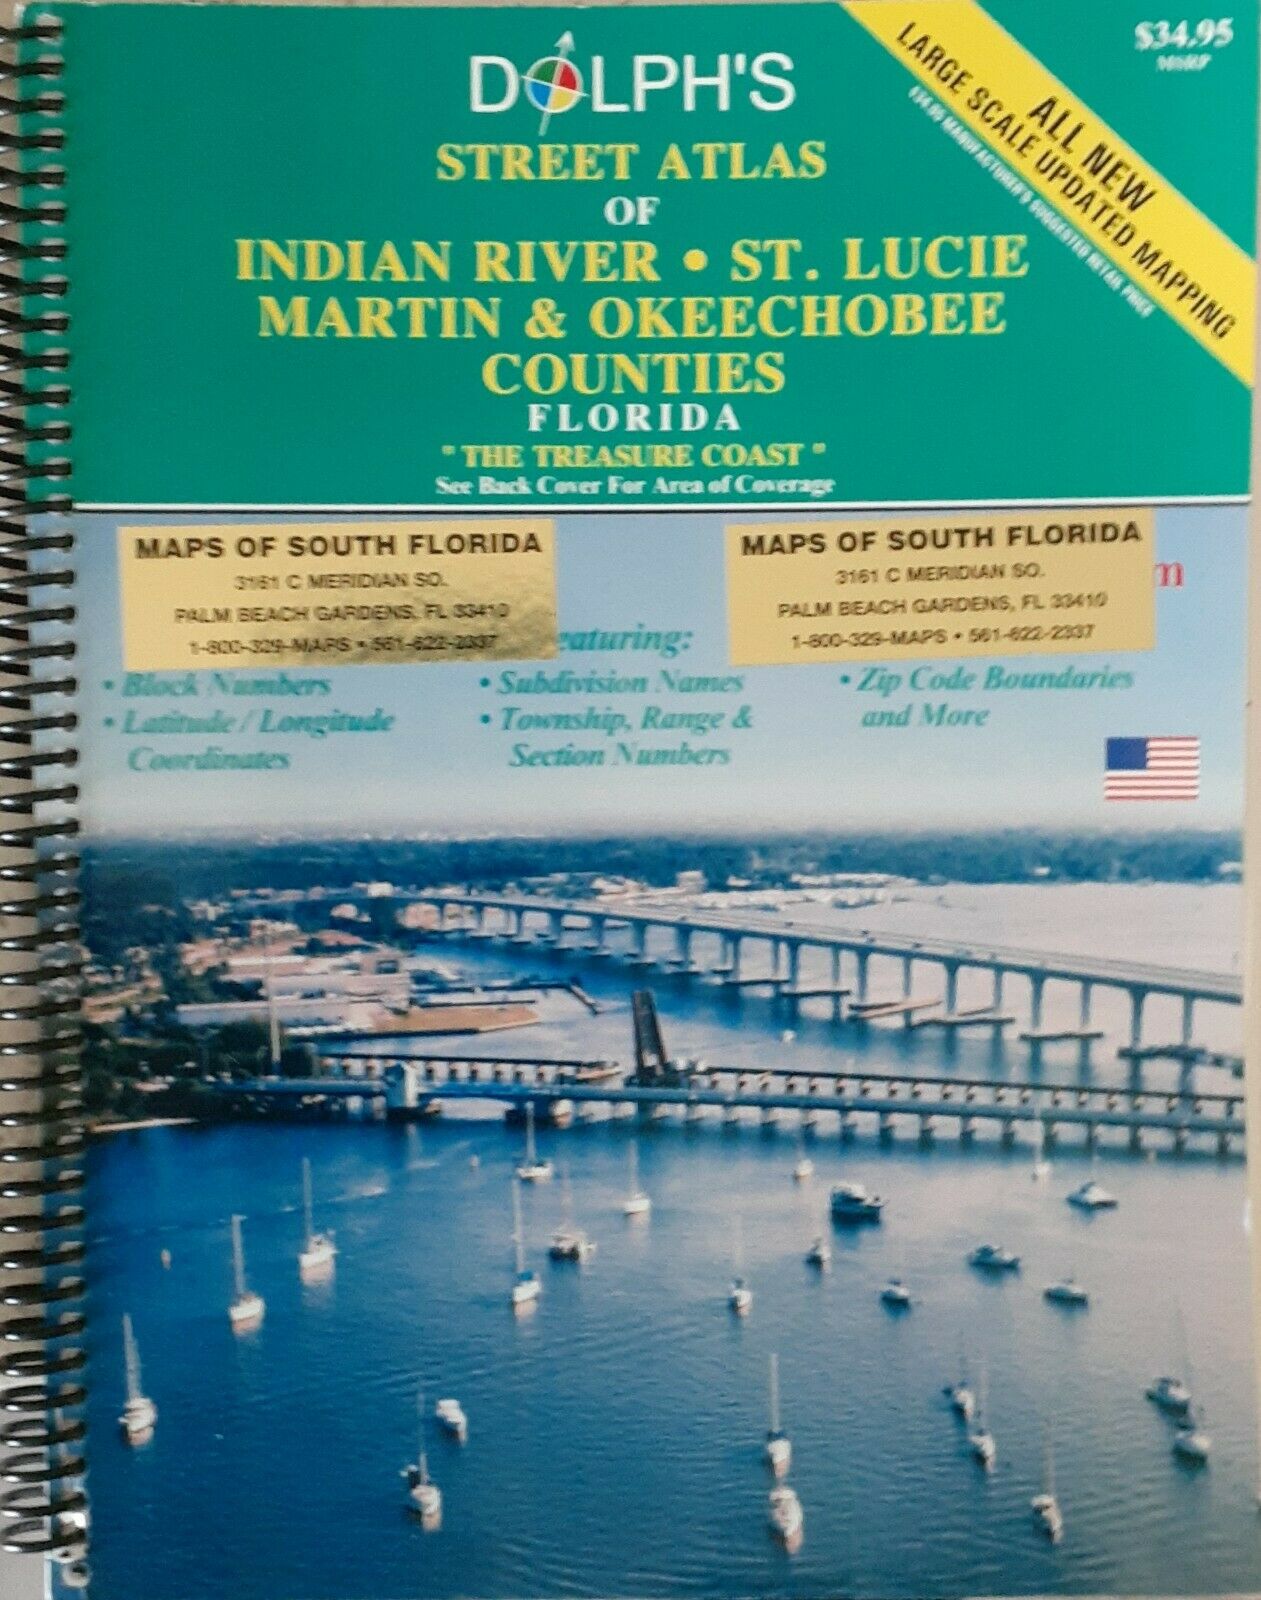 STREET ATLAS OF INDIAN RIVER* ST. LUCIE8 MARTIN & OKEECHOBEE COUNTIES FLORIDA